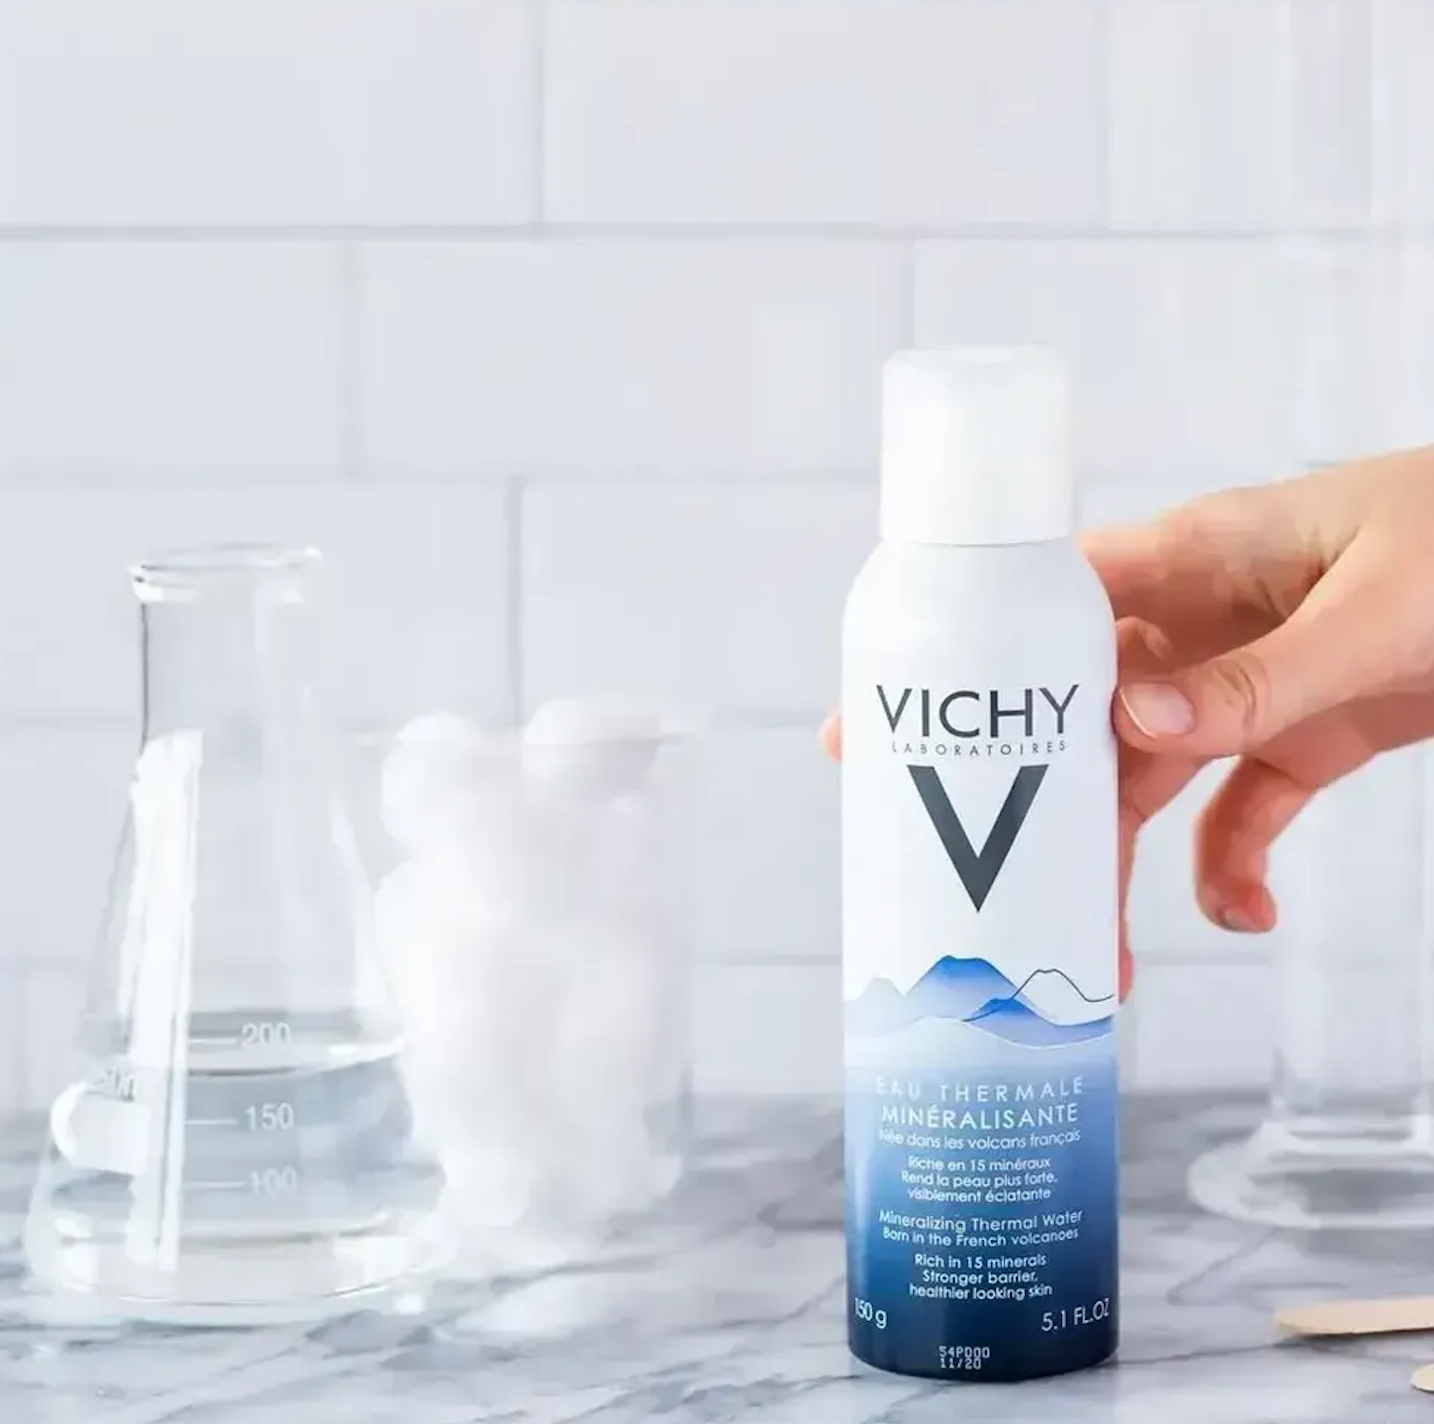 Xịt Khoáng Vichy Mineralizing Thermal Water 50ml